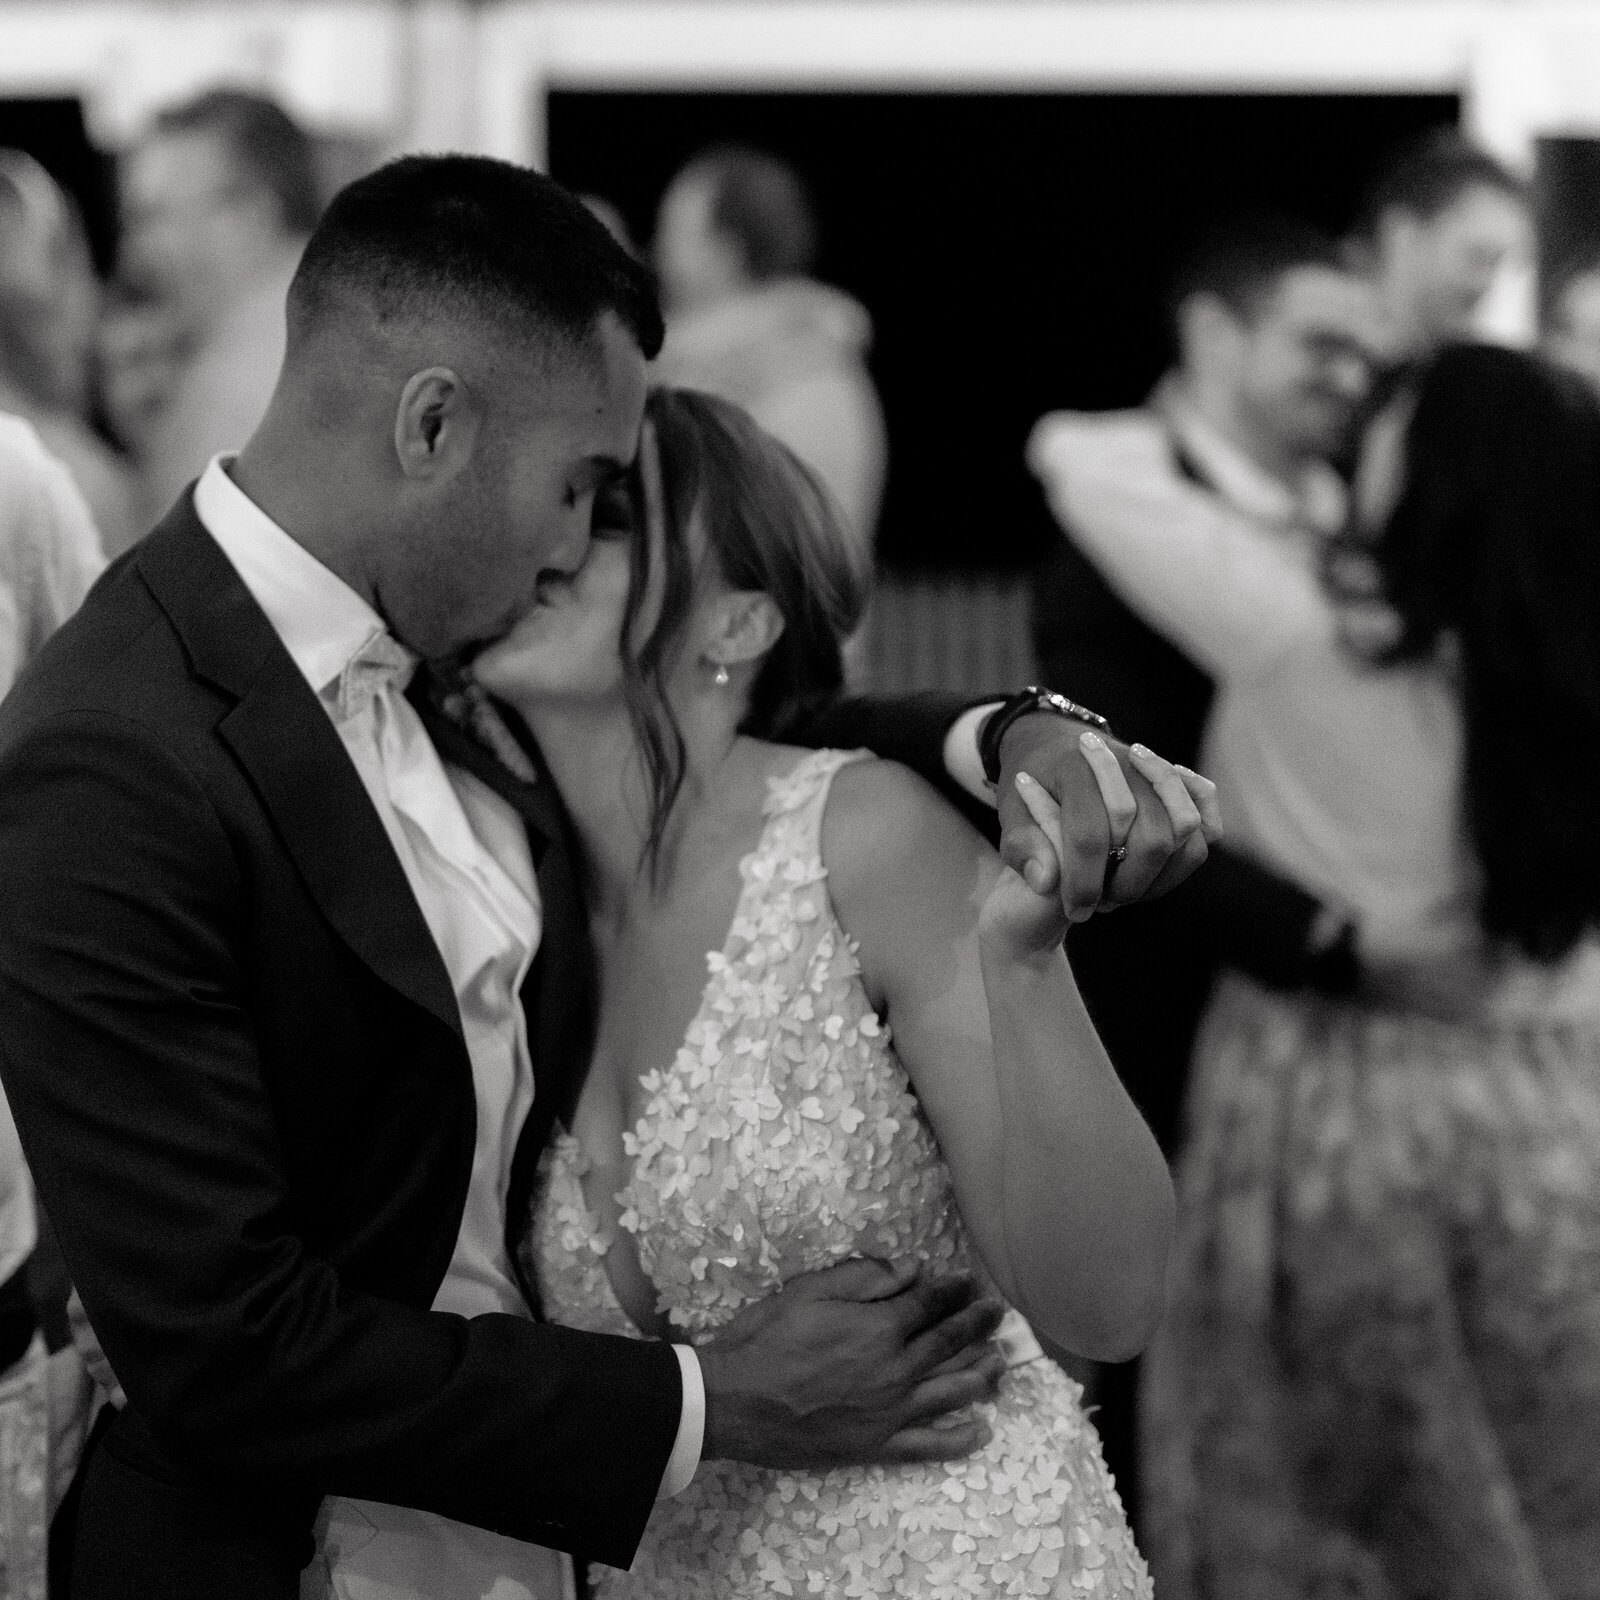 Chloe-Benny-Rexvil-Photography-Adelaide-Wedding-Photographer-581